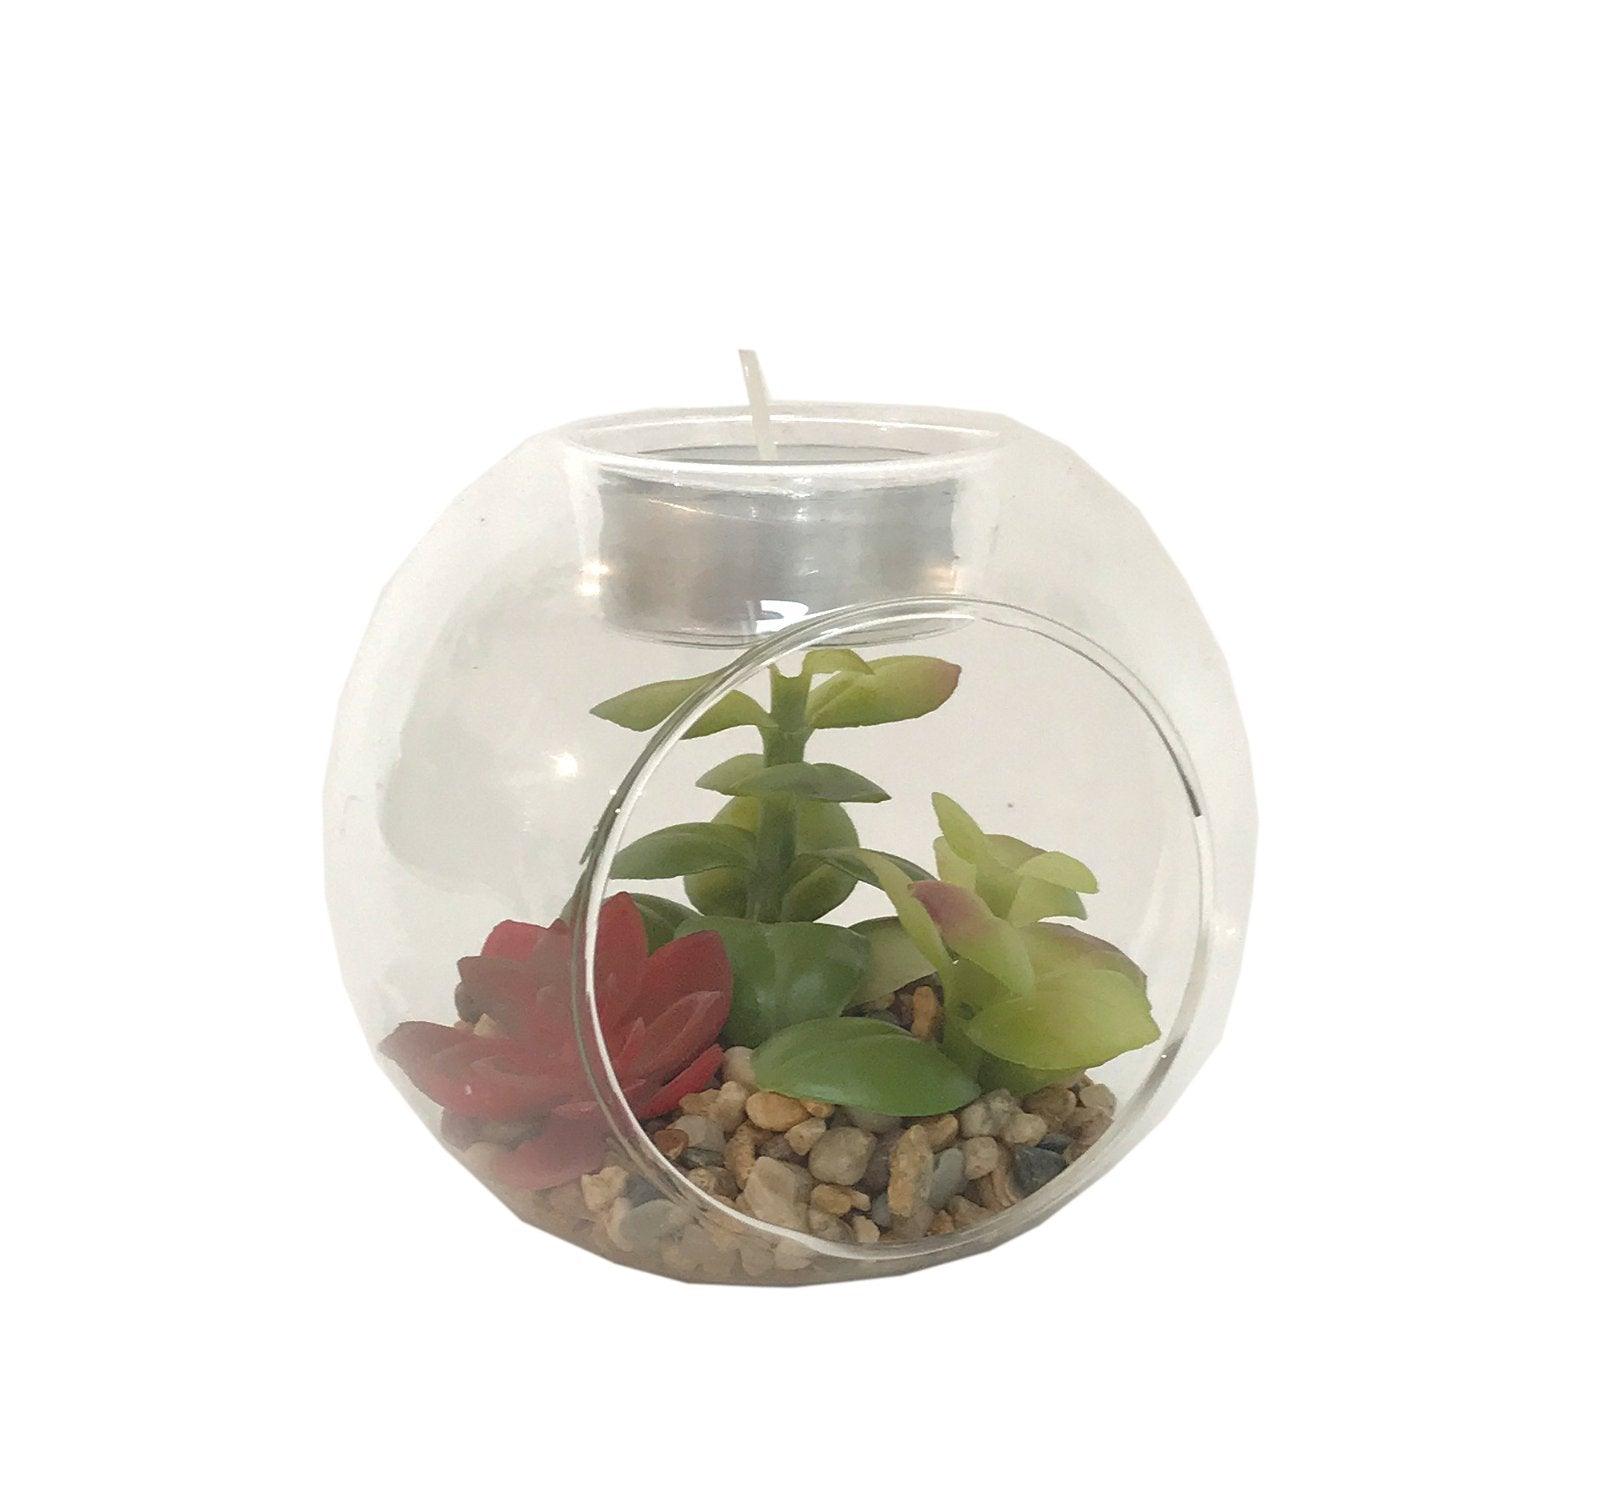 Succulent In Glass Terrarium with TeaLight Holder-Small Succulents & Faux Bonsai